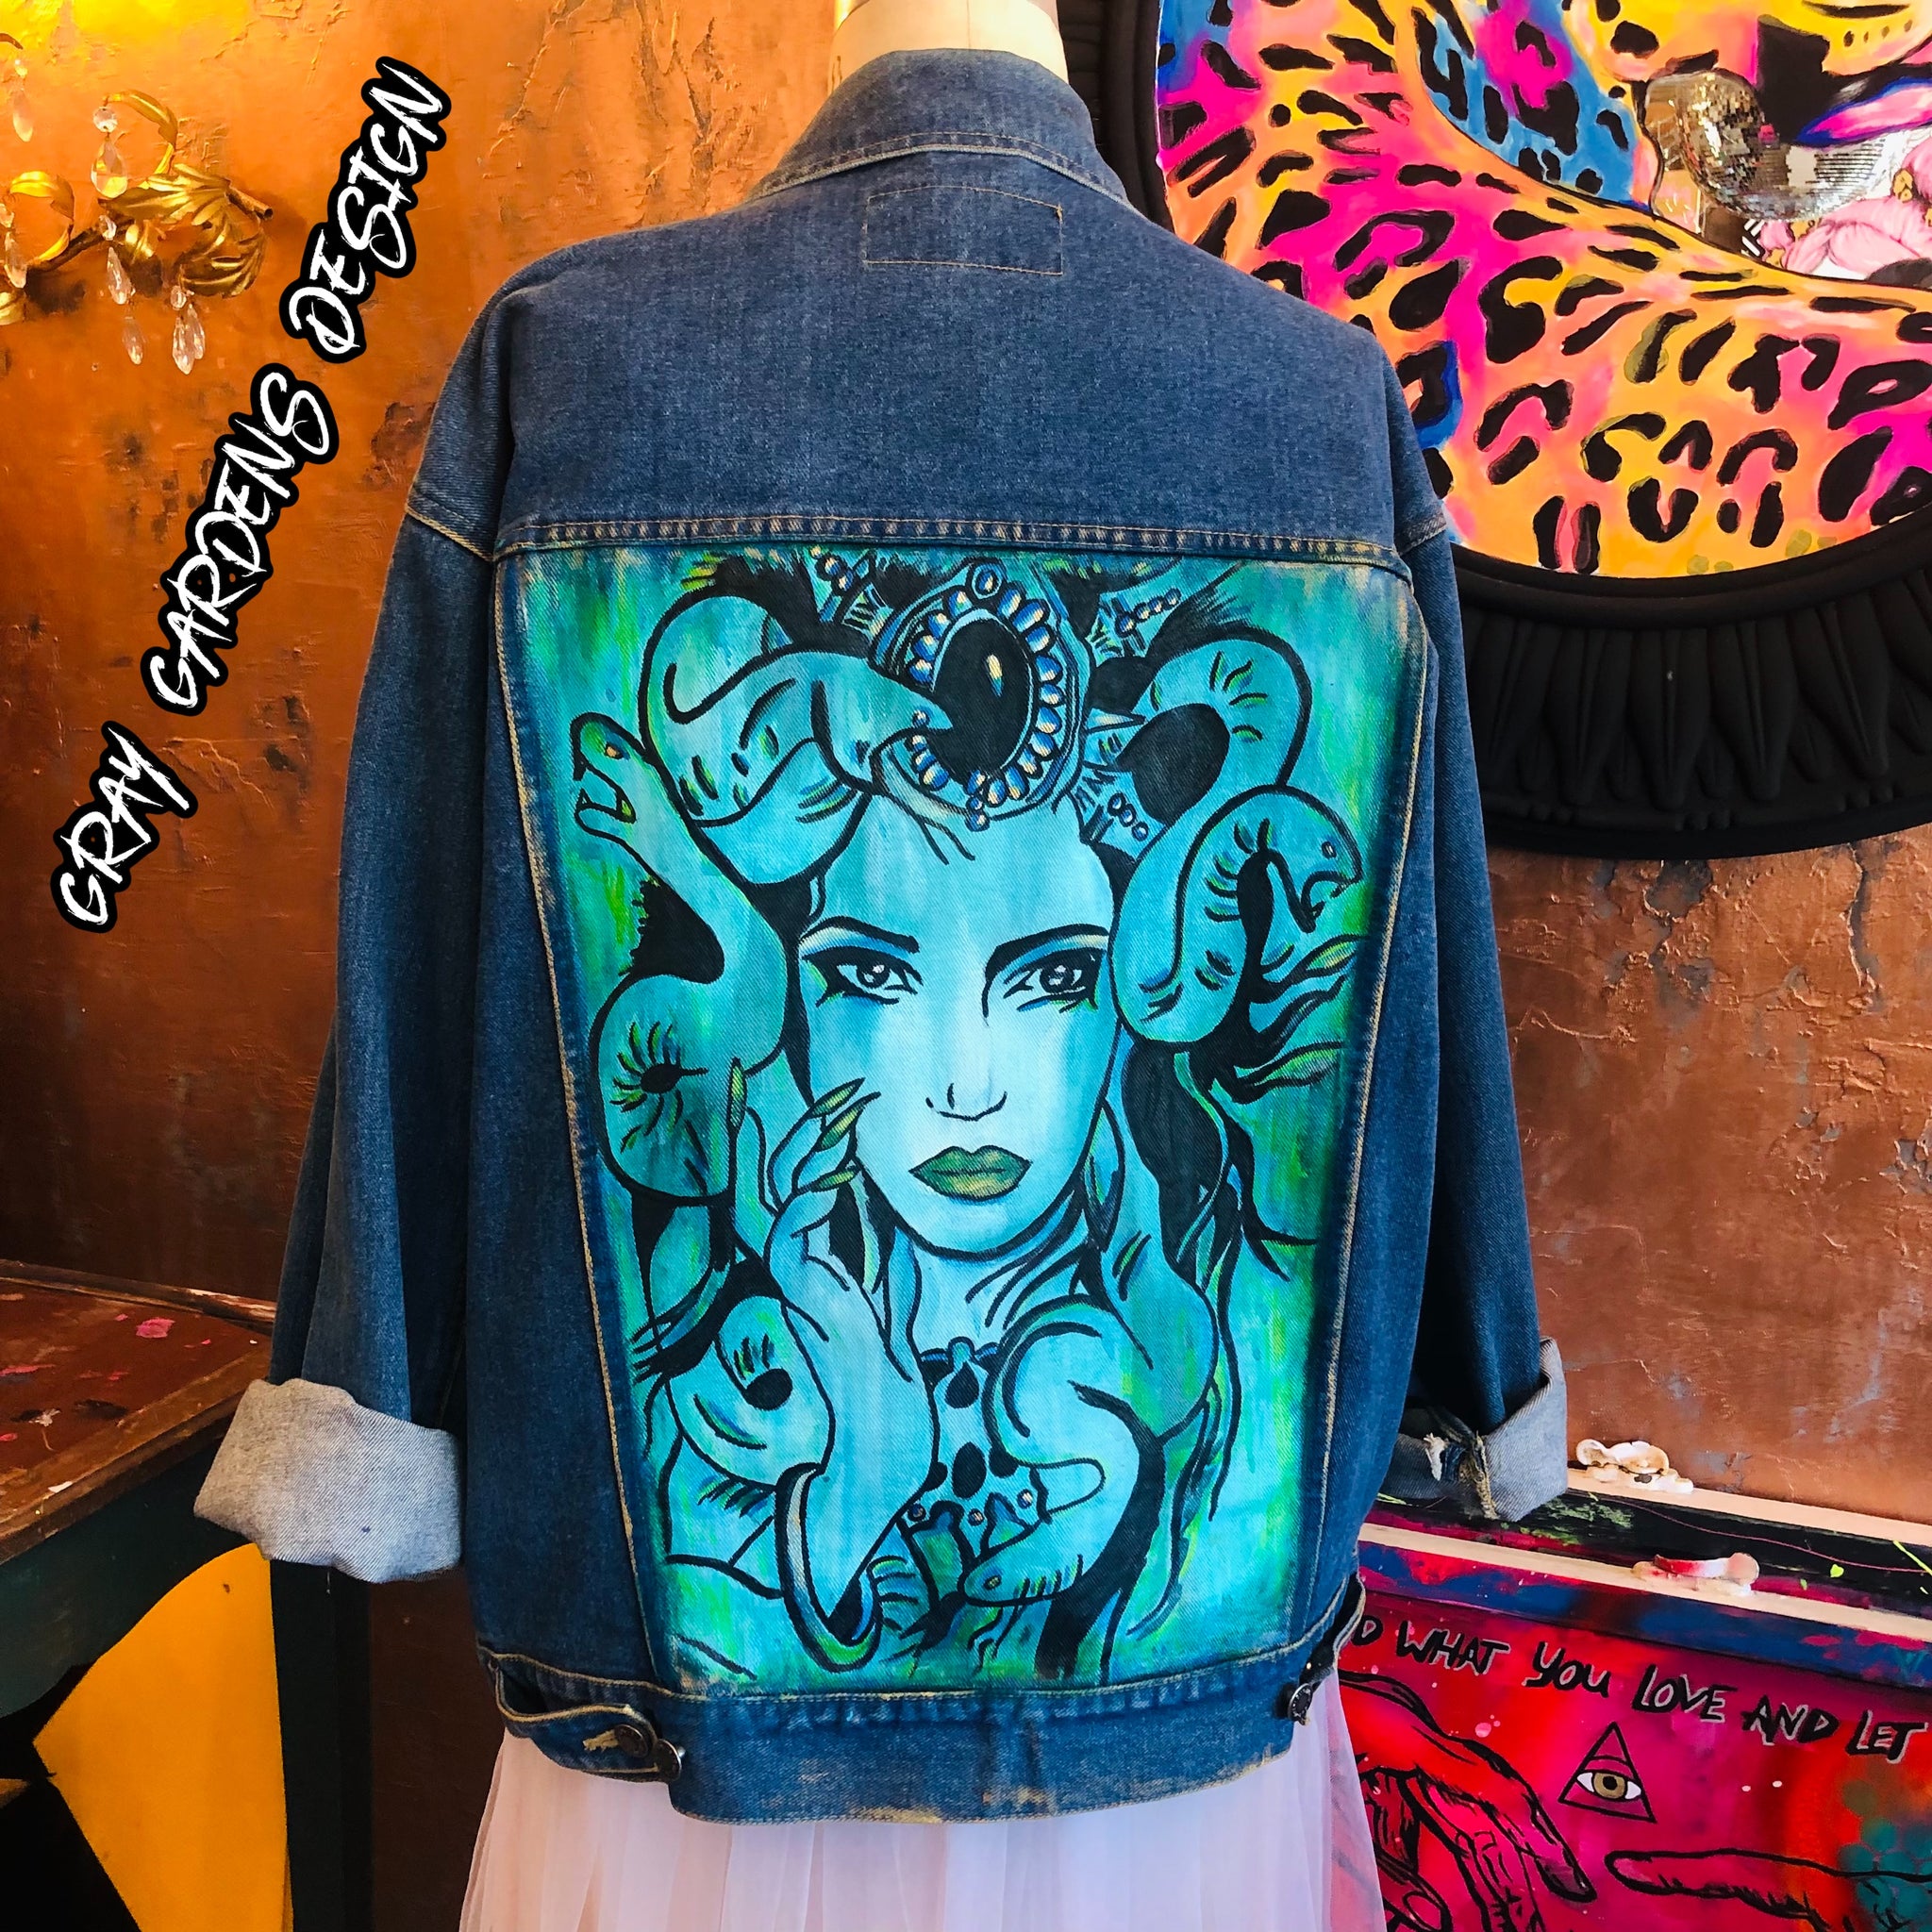 Handpainted jean jacket Creepy surreal woman Shepard ugelpadreabadgobpe